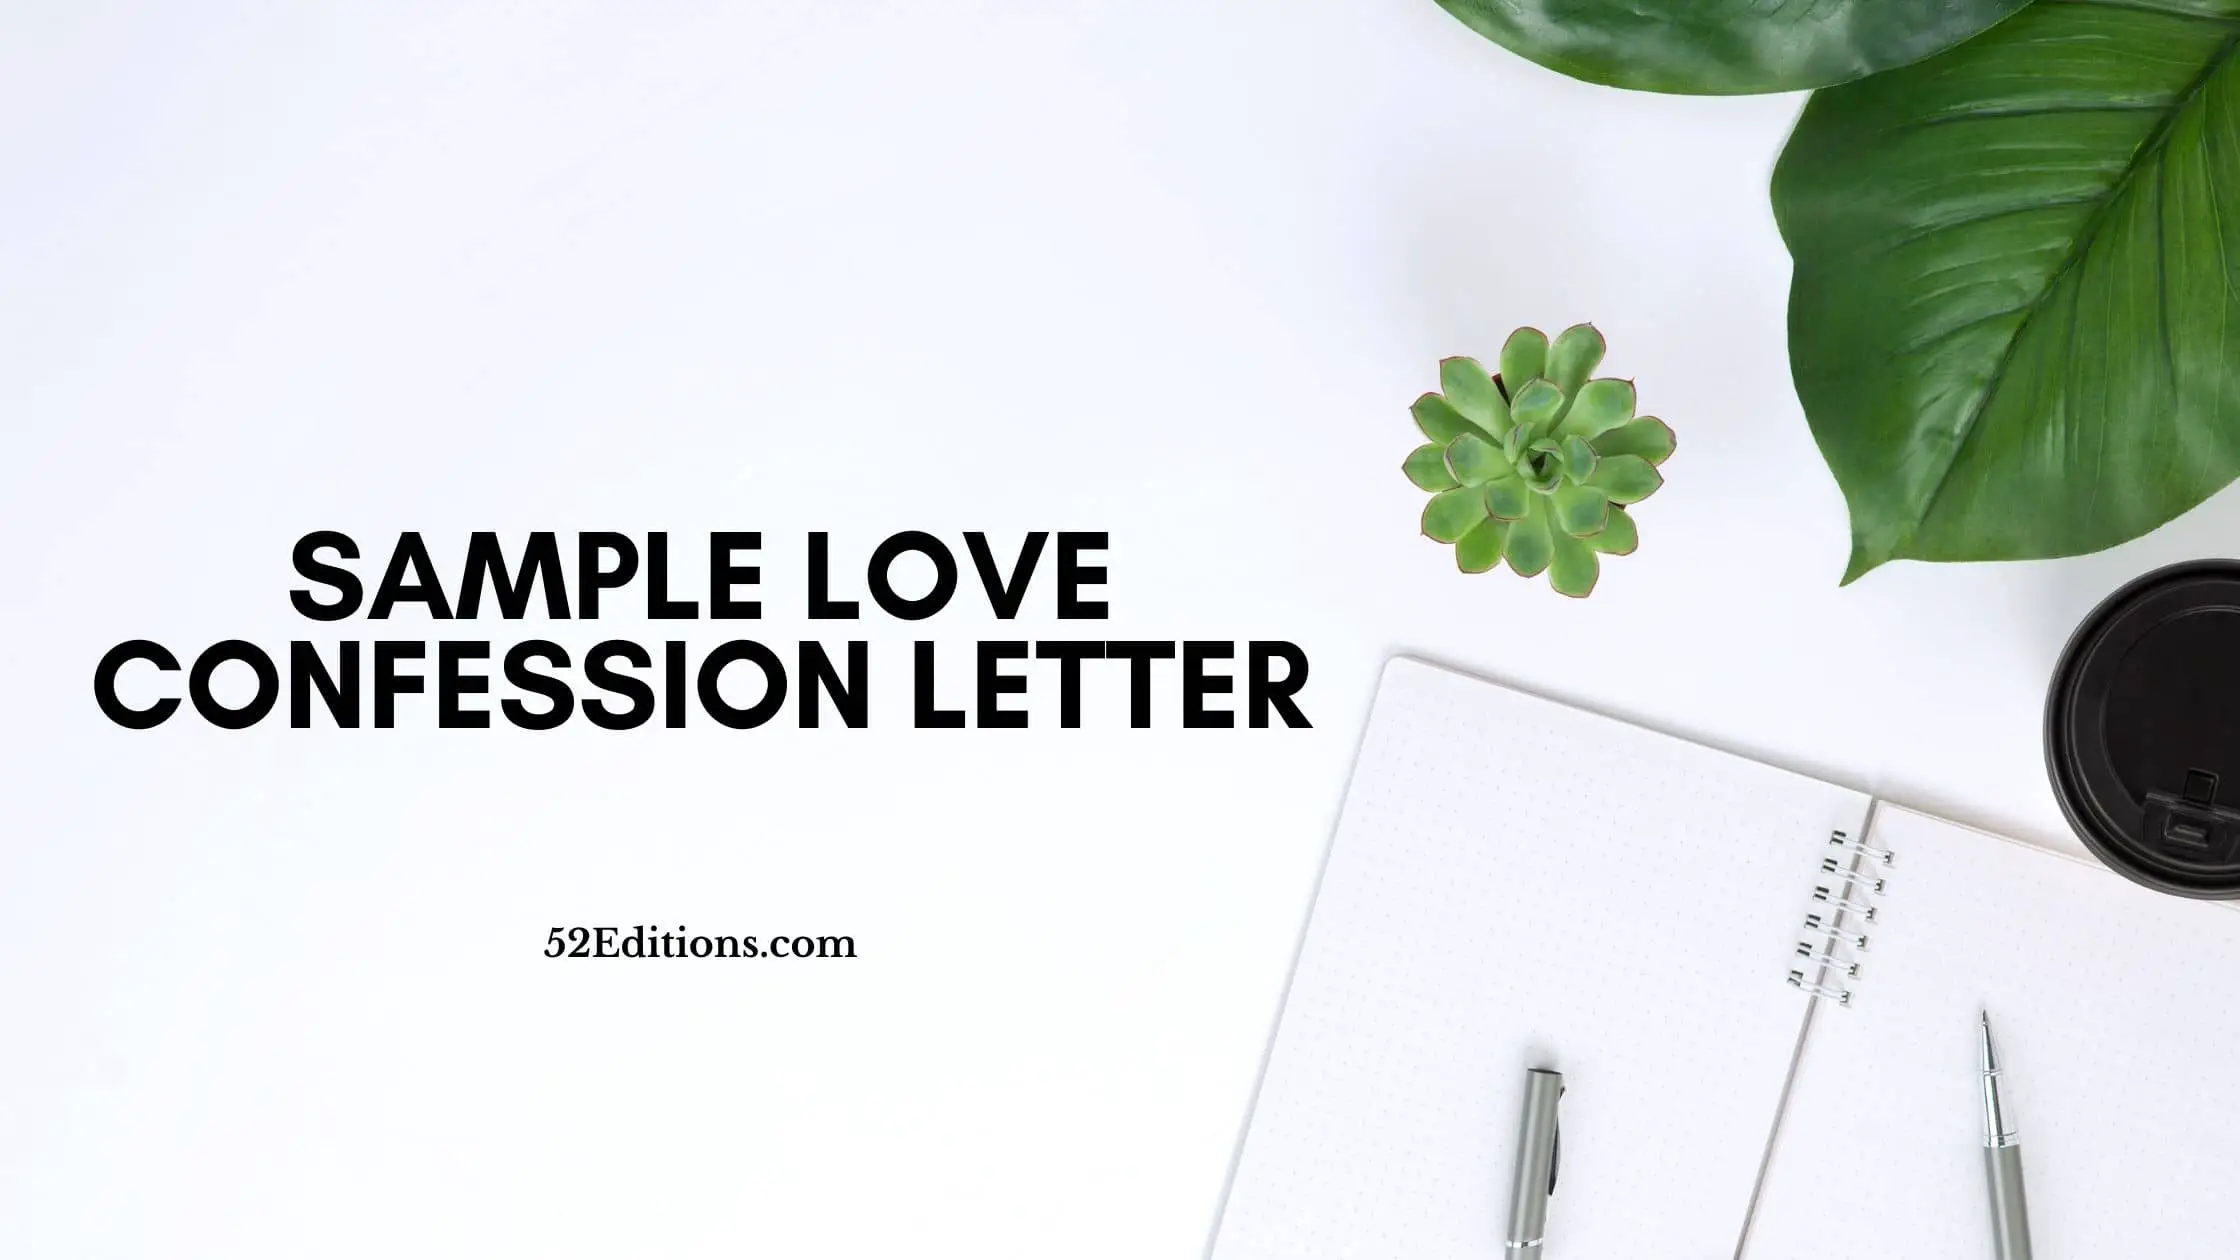 Sample Love Confession Letter // FREE Letter Templates